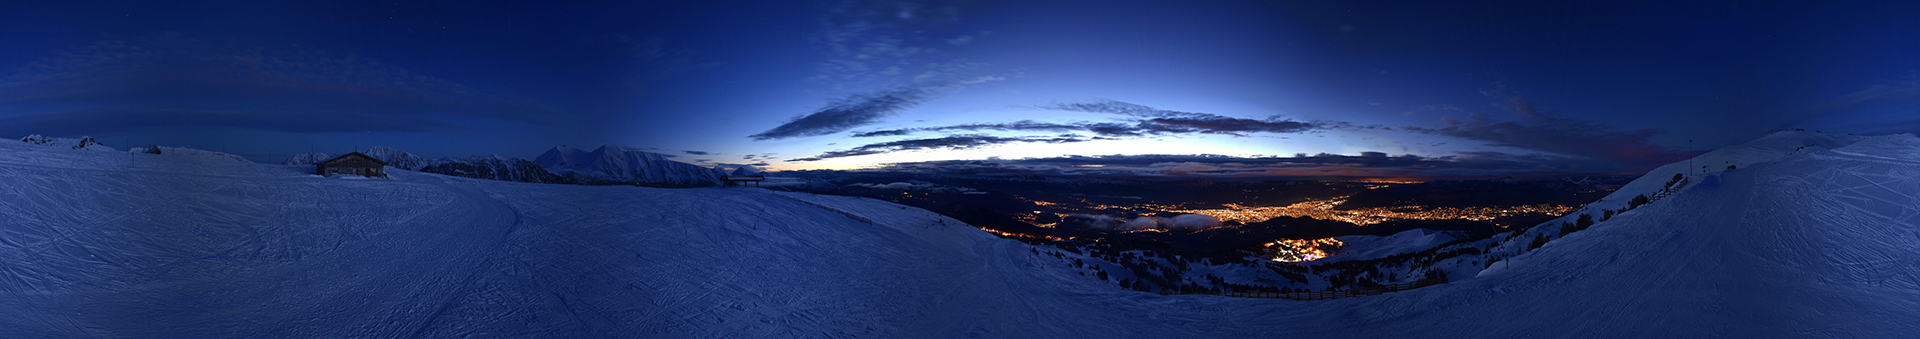 Chamrousse webcam coucher soleil ville illuminée 2021 station ski montagne grenoble isère alpes france - © Skaping